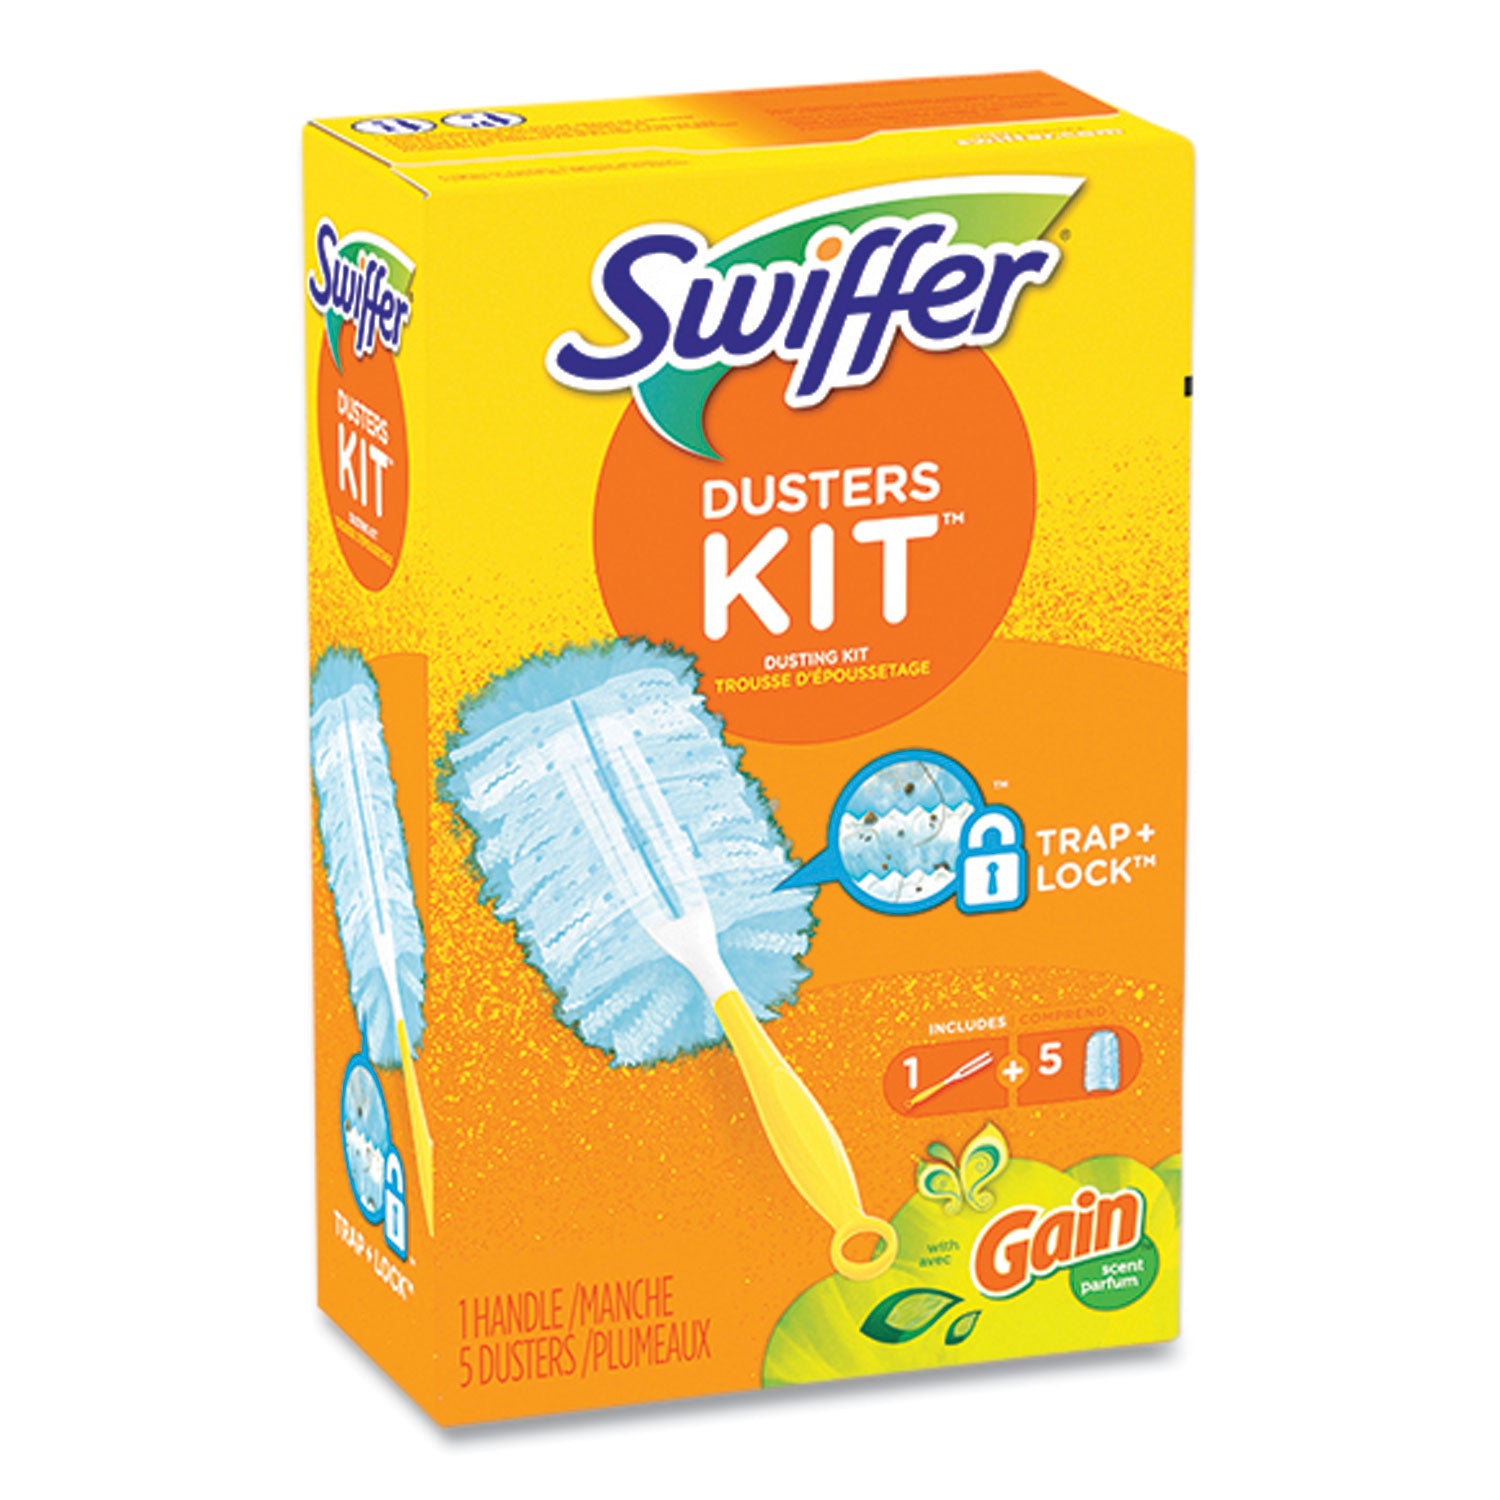 dusters-starter-kit-dust-lock-fiber-6-handle-blue-yellow-gain-scent_pgc74330 - 1